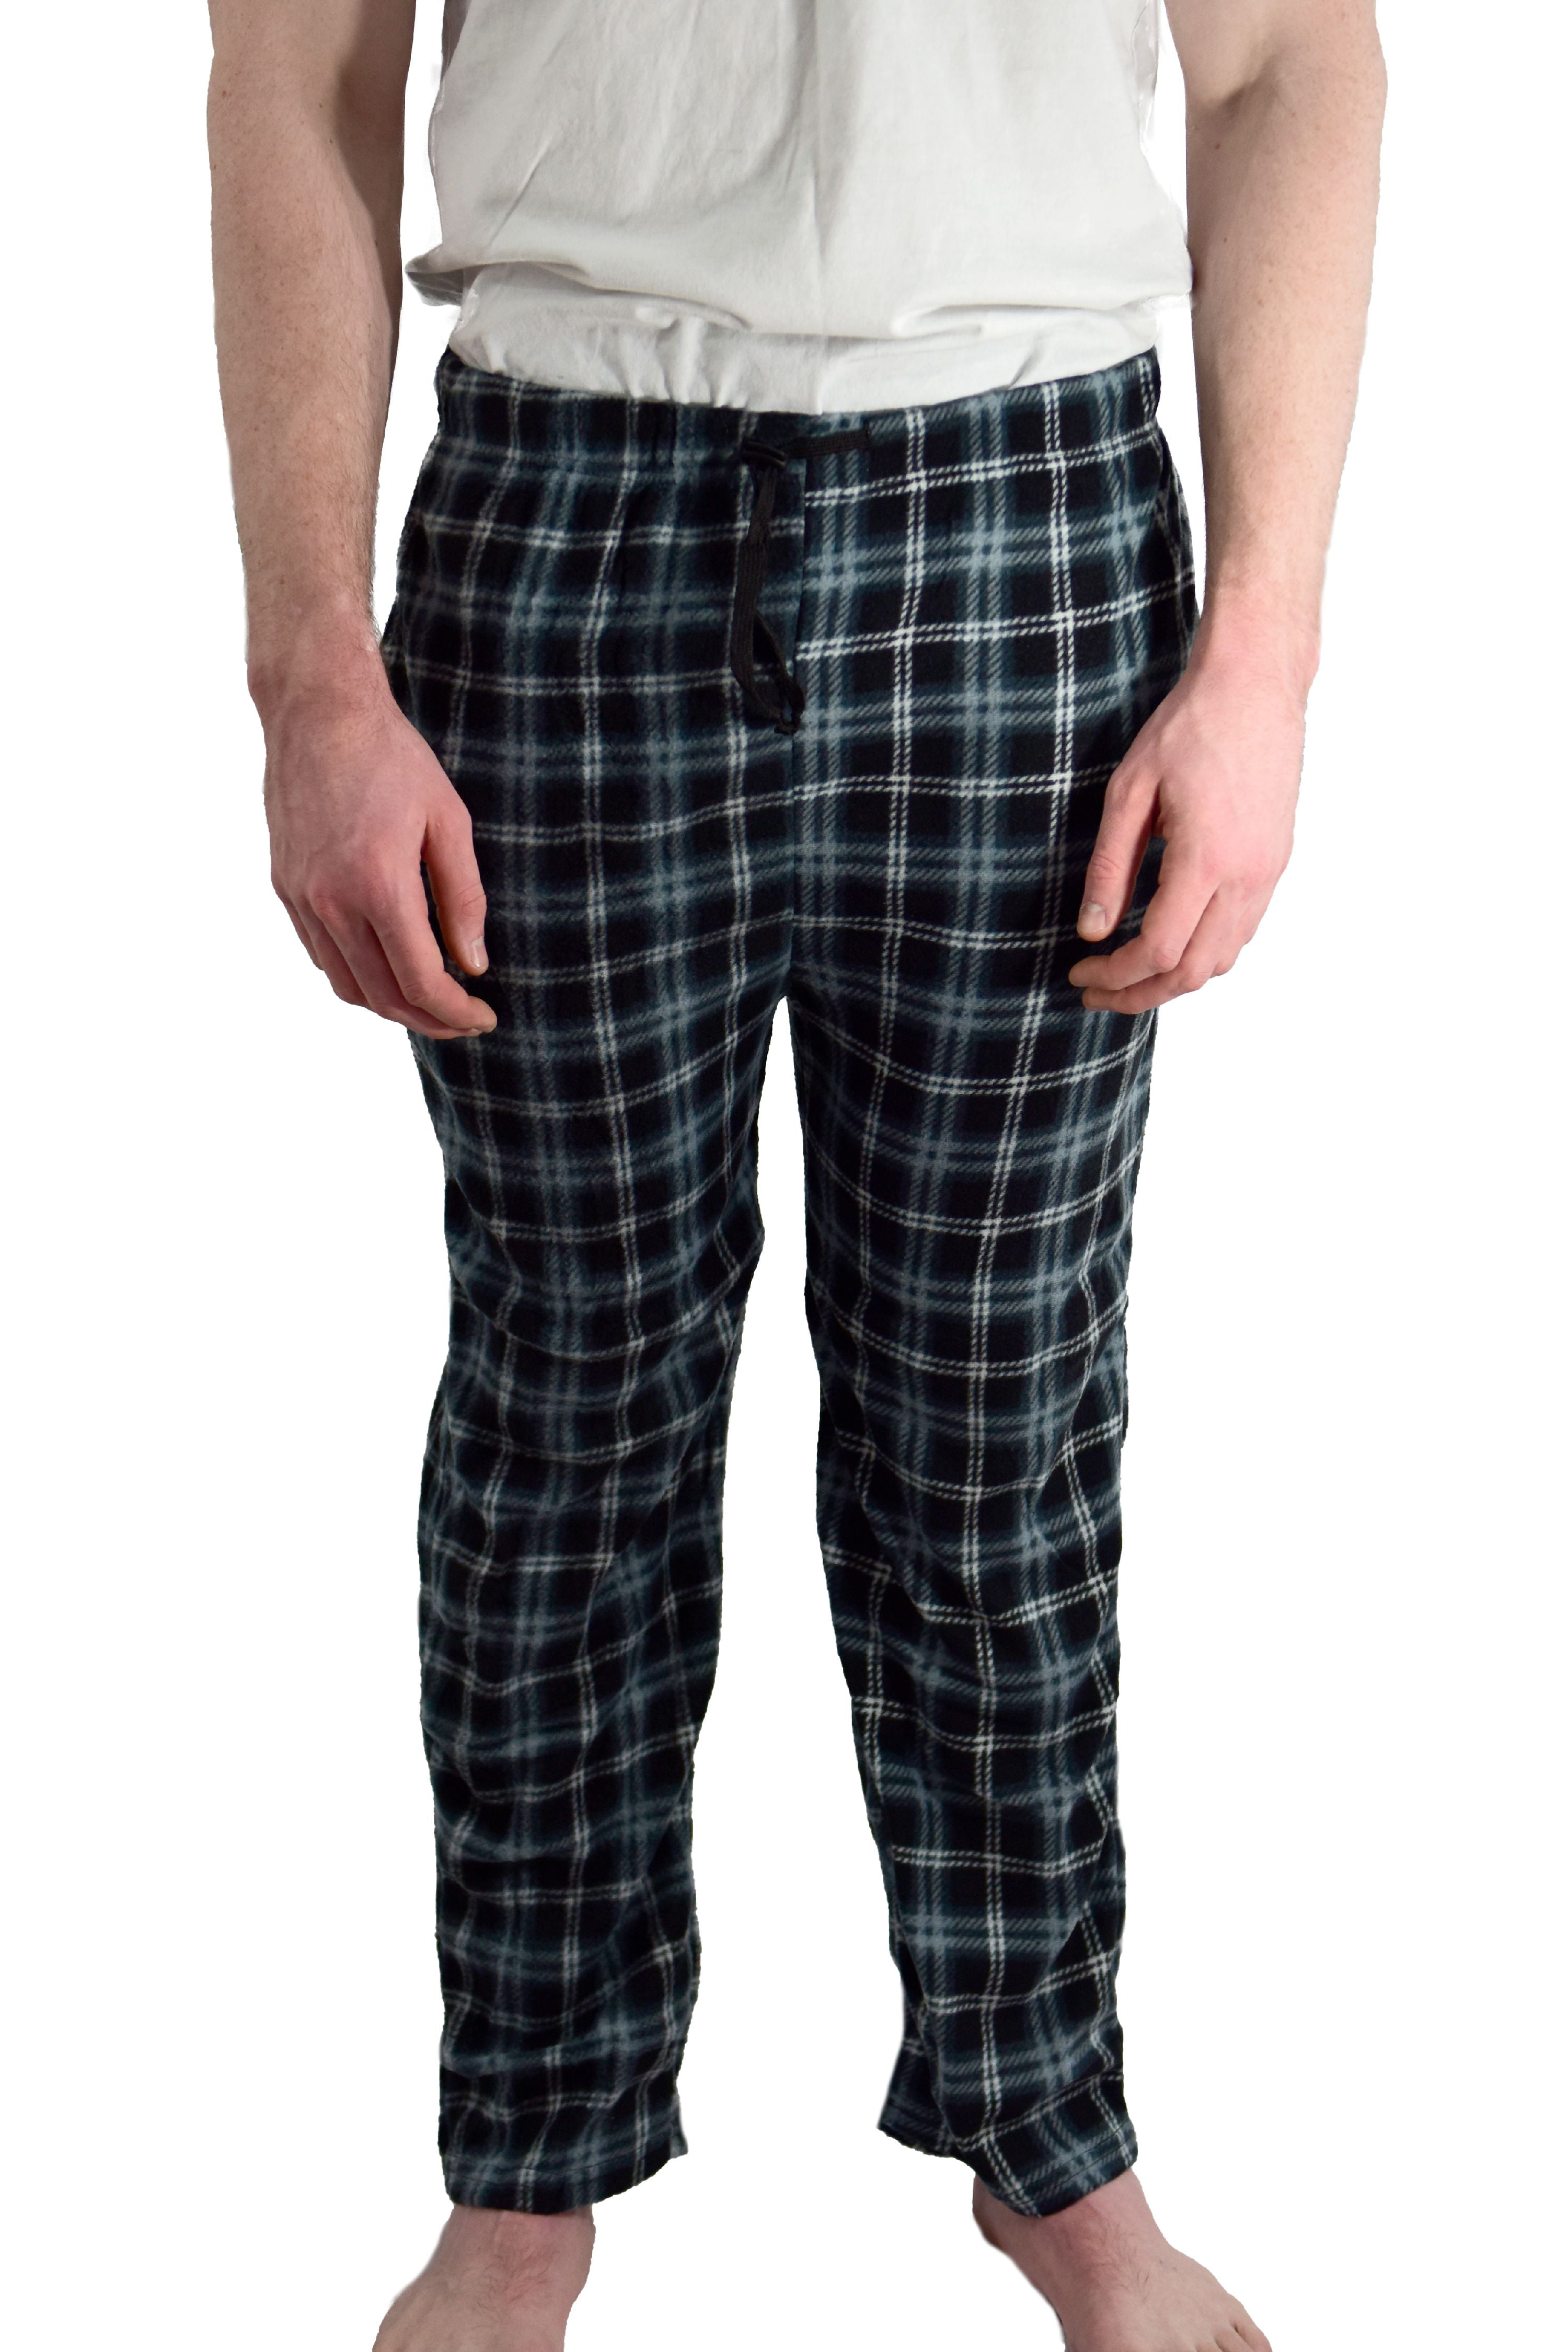 EZI - EZI Men's 'James' Fleece Lounge Pants - Pajama Pants for Men ...